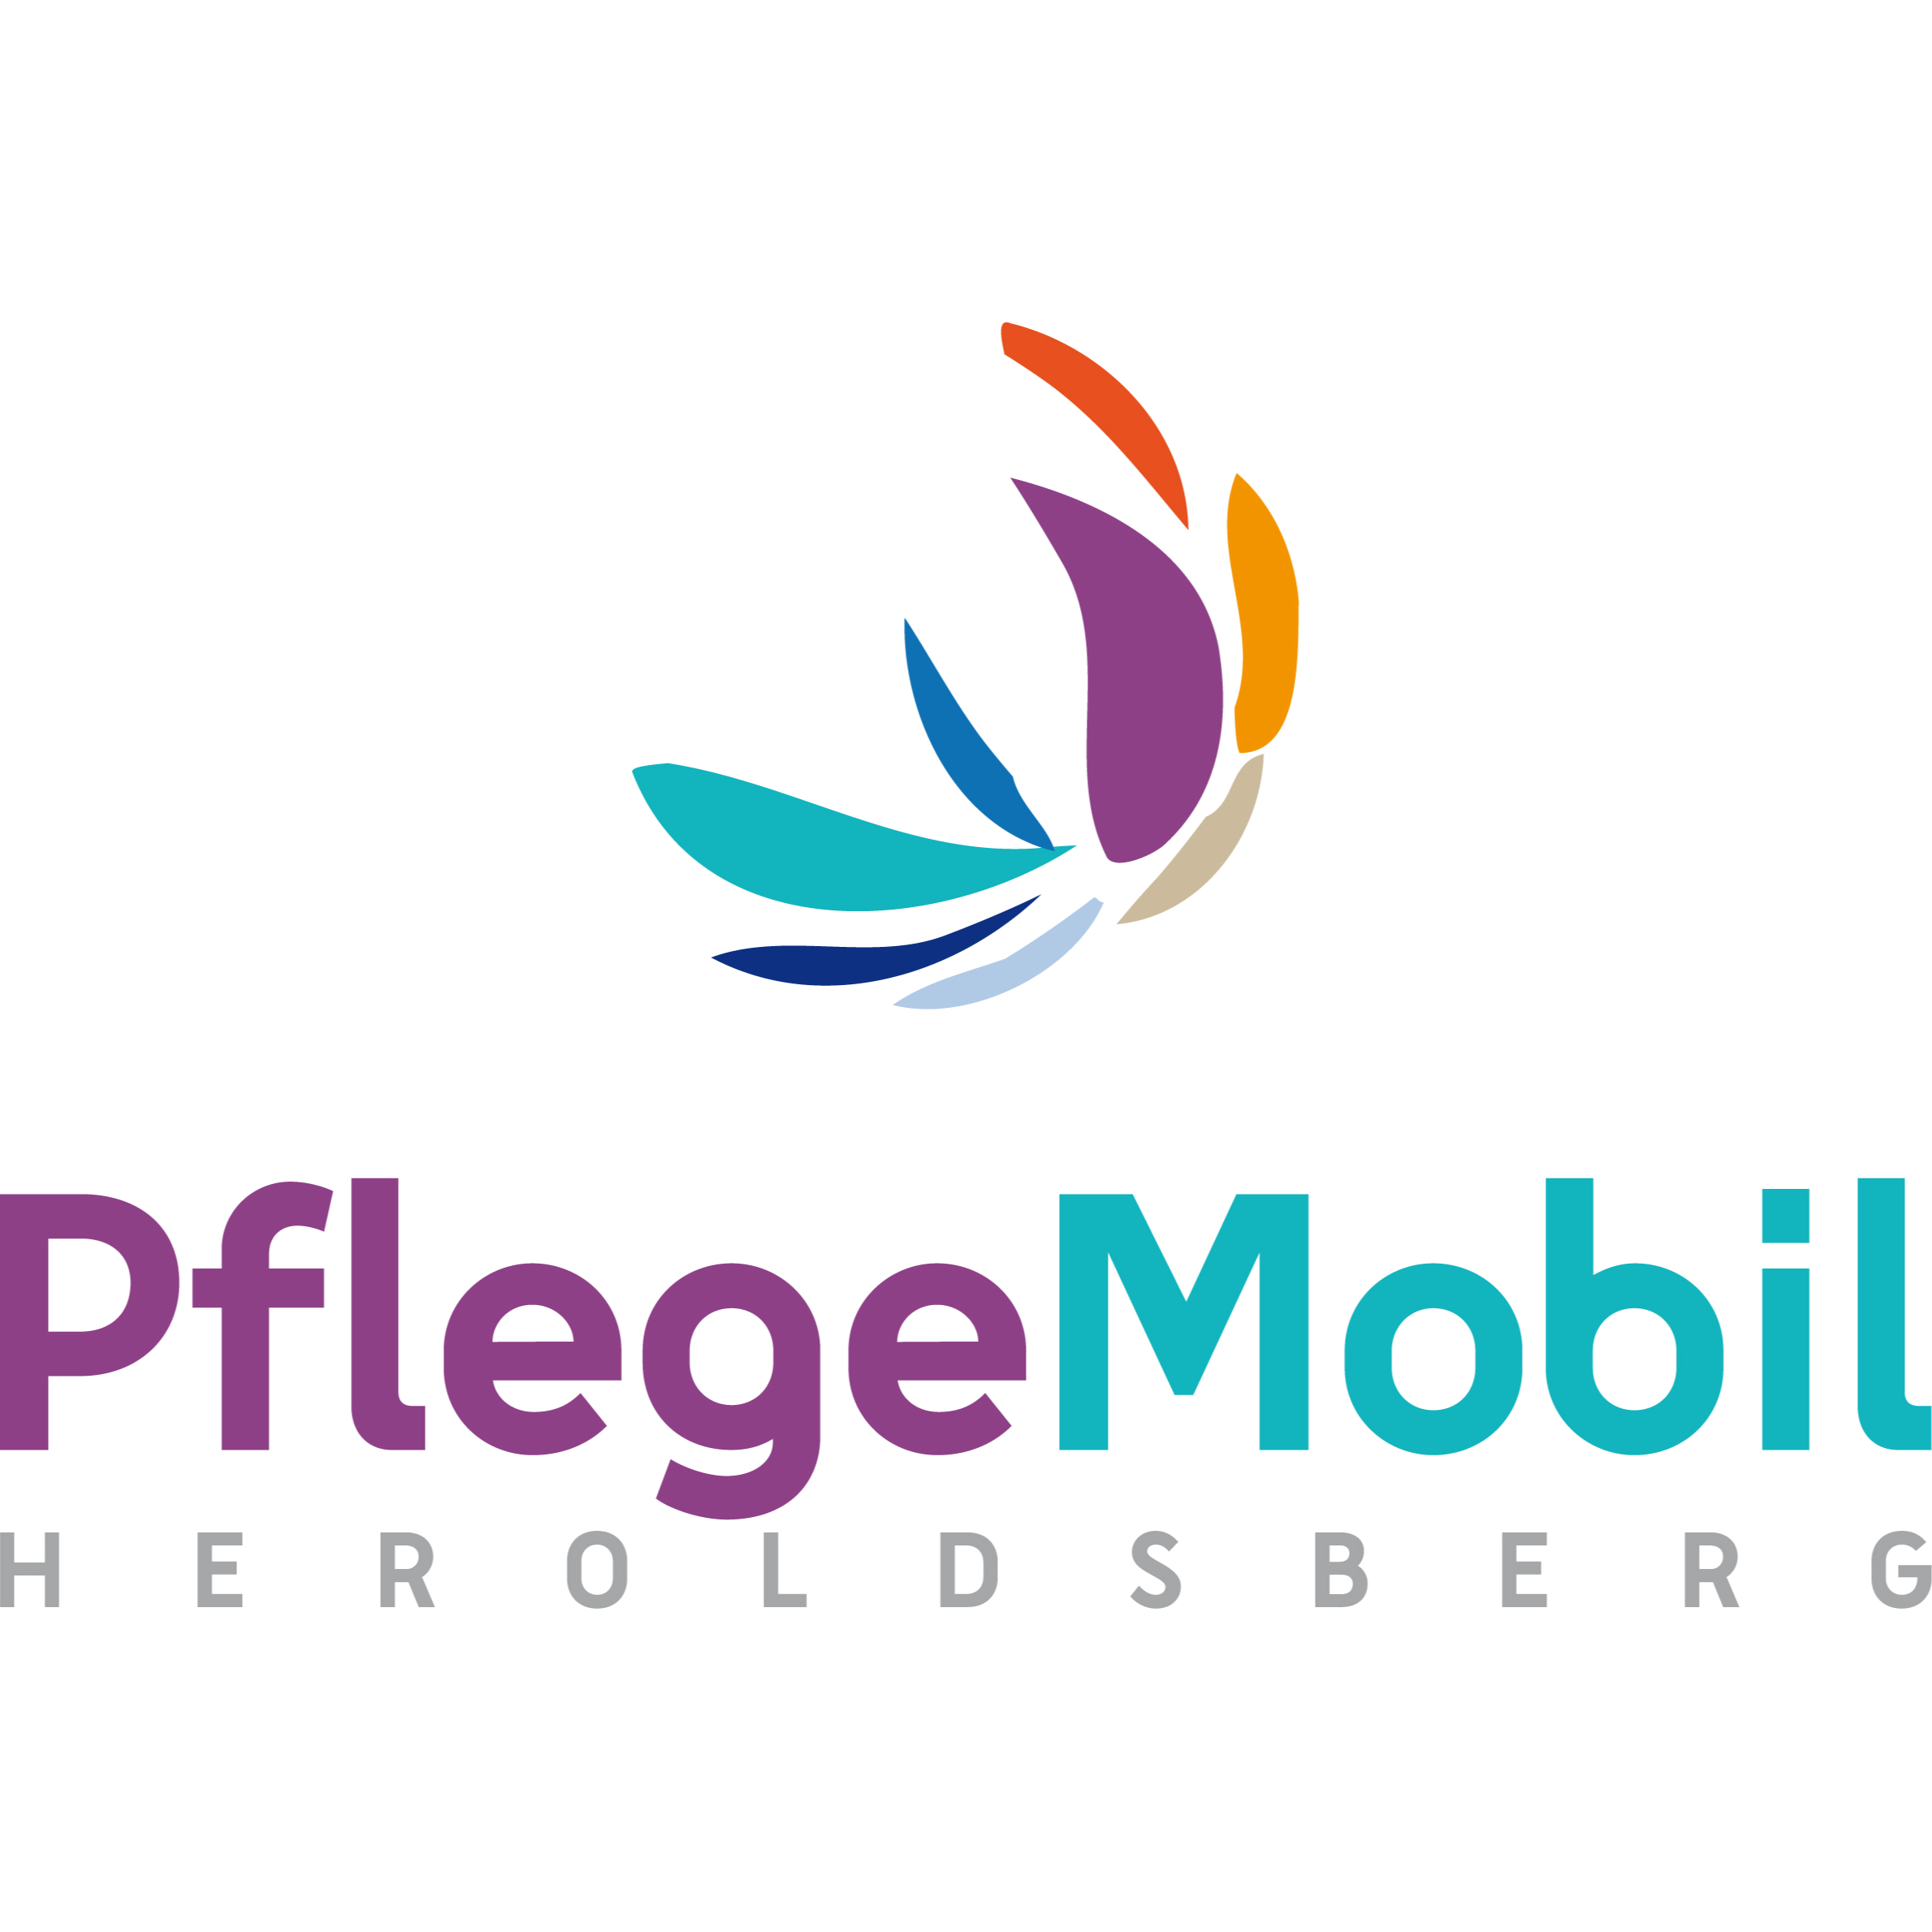 PflegeMobil Heroldsberg GmbH in Heroldsberg - Logo